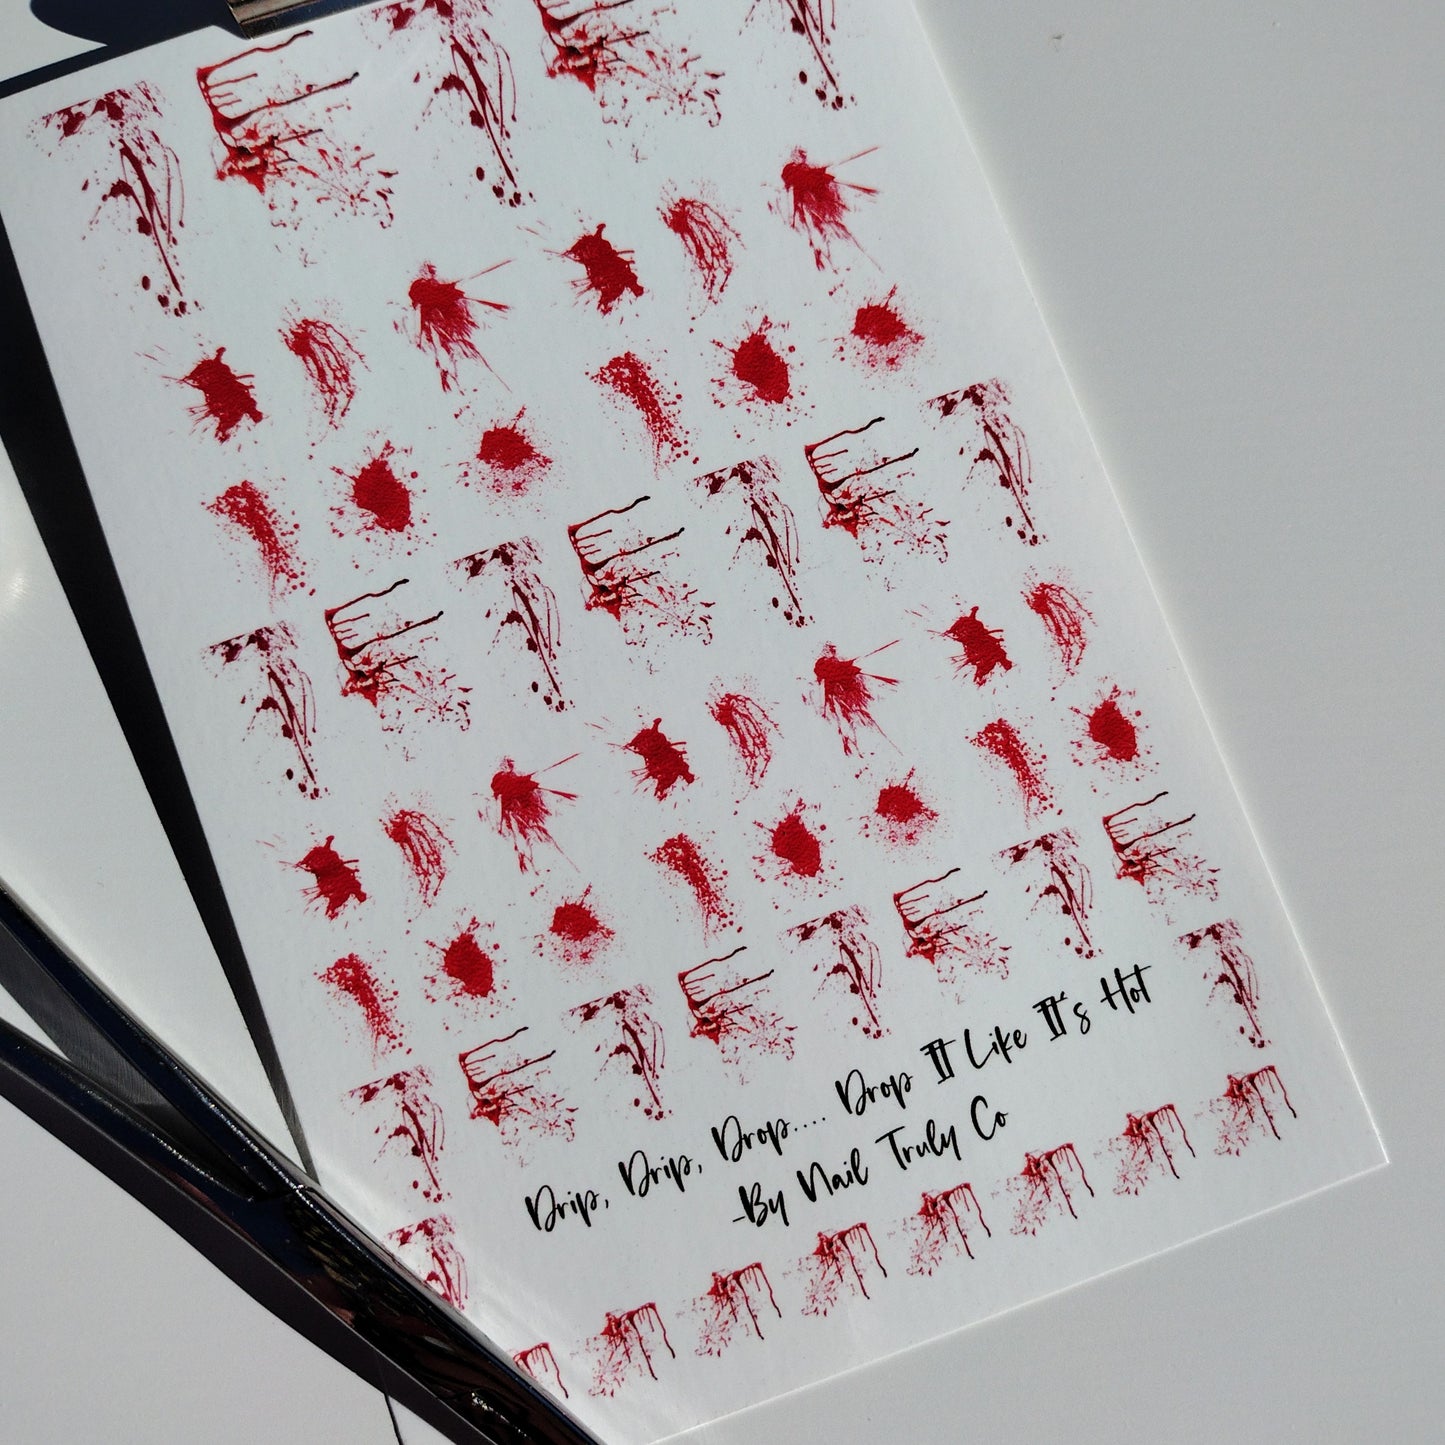 Halloween Blood Splatter Decals For Nails -Drip, Drip, Drop.... Drop It Like It's Hot- Blood Drop